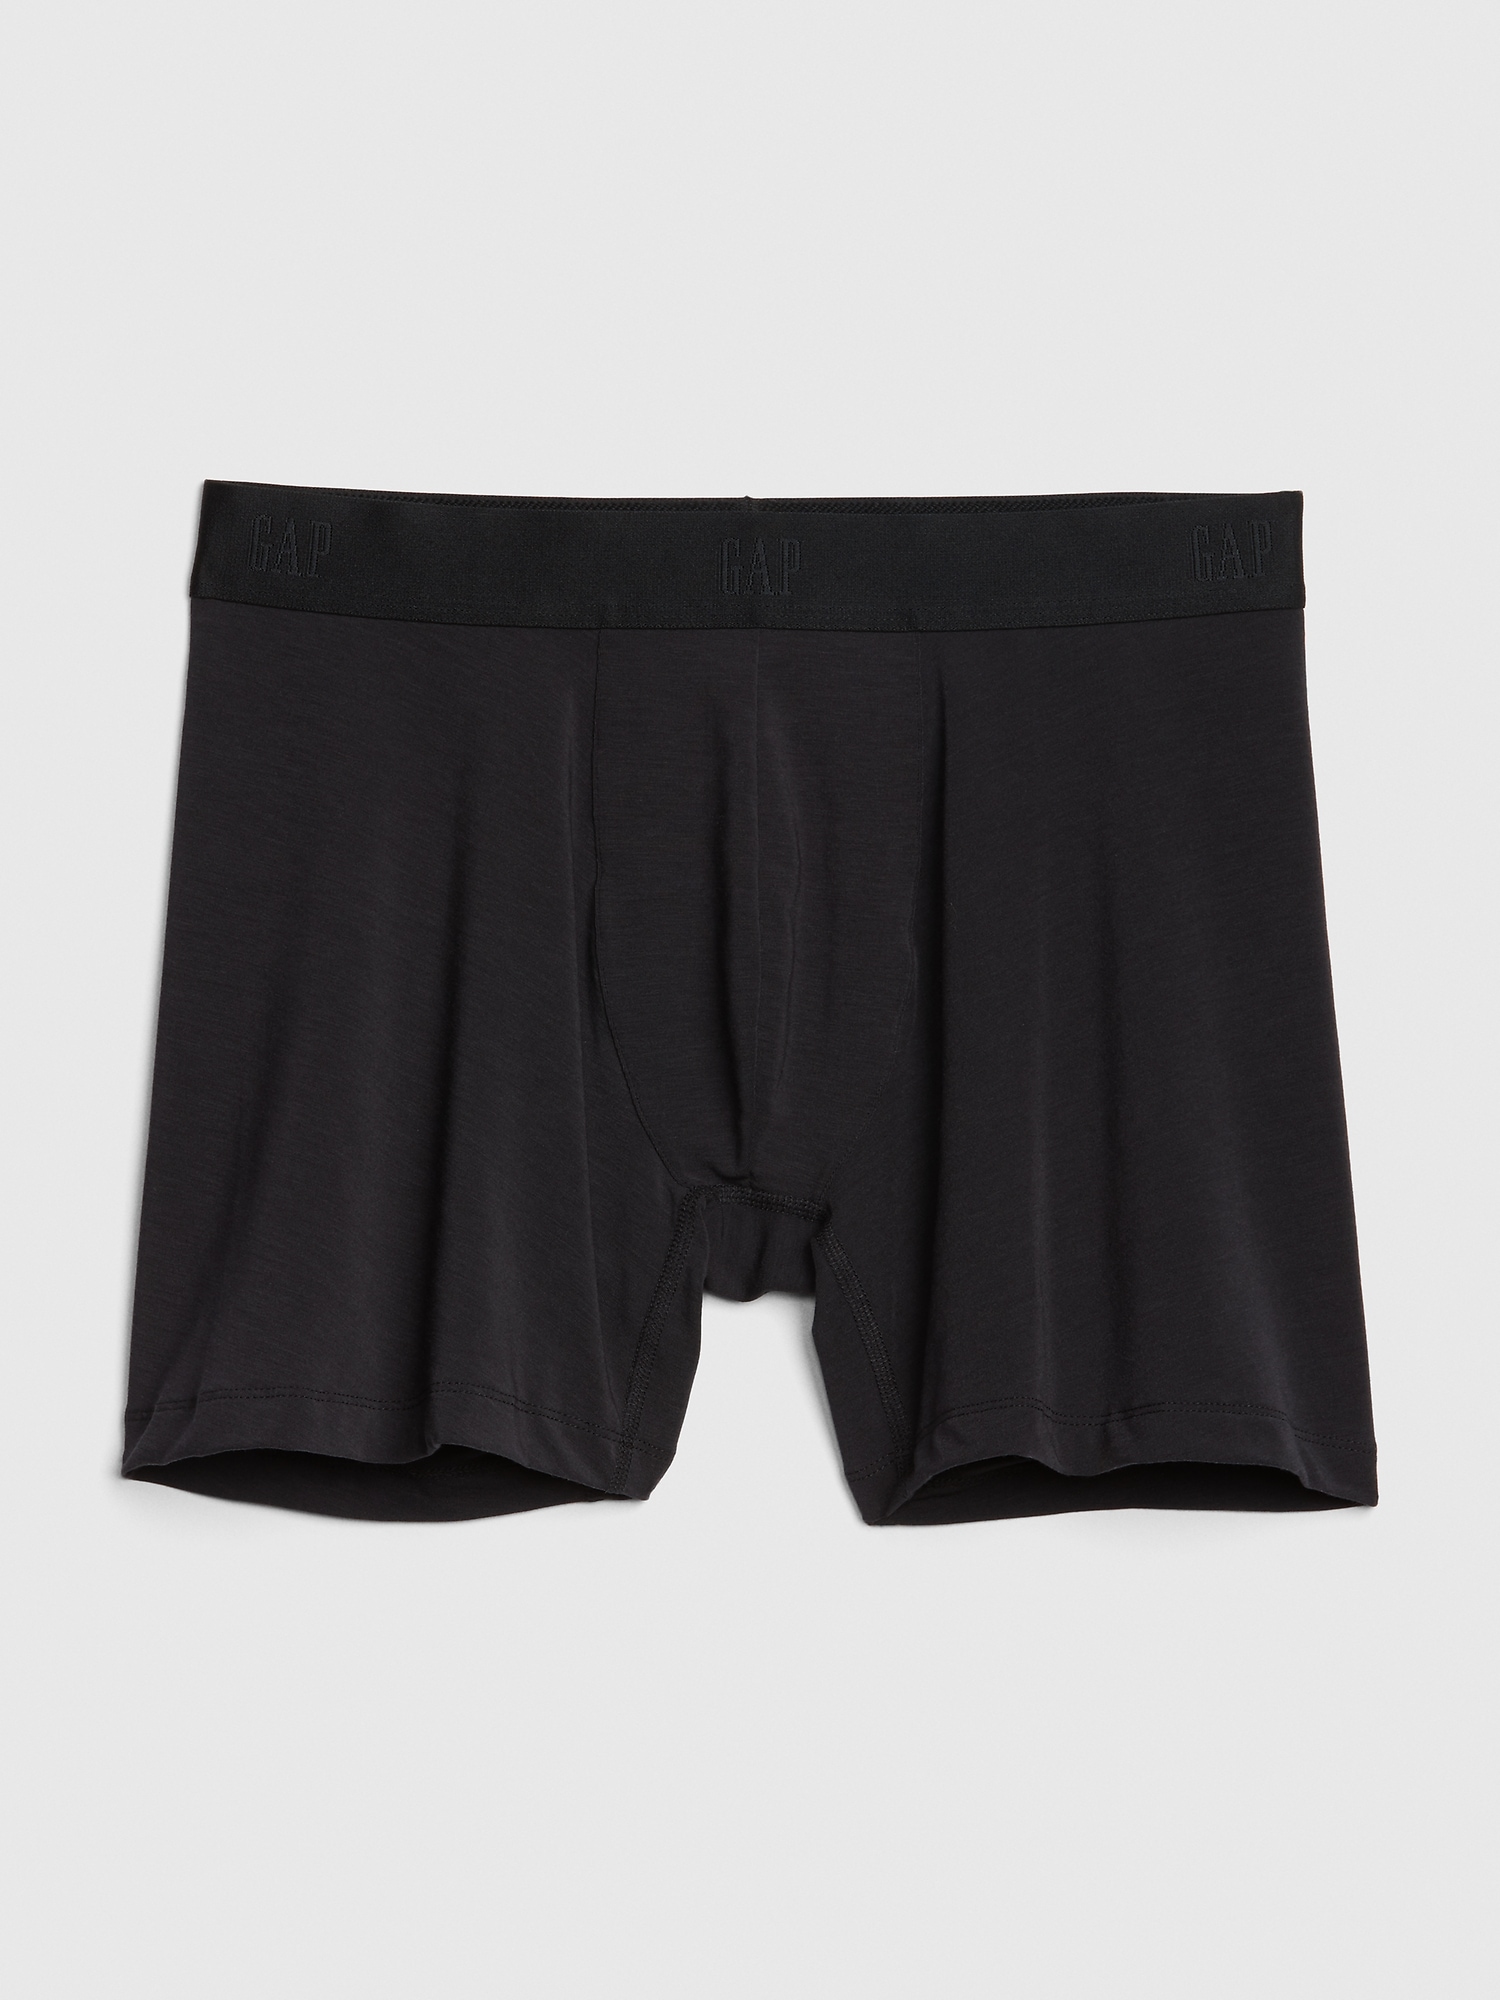 2 PAIR NWT Mens GAP Knit Boxer Briefs Brief Shorts Underwear XL 38